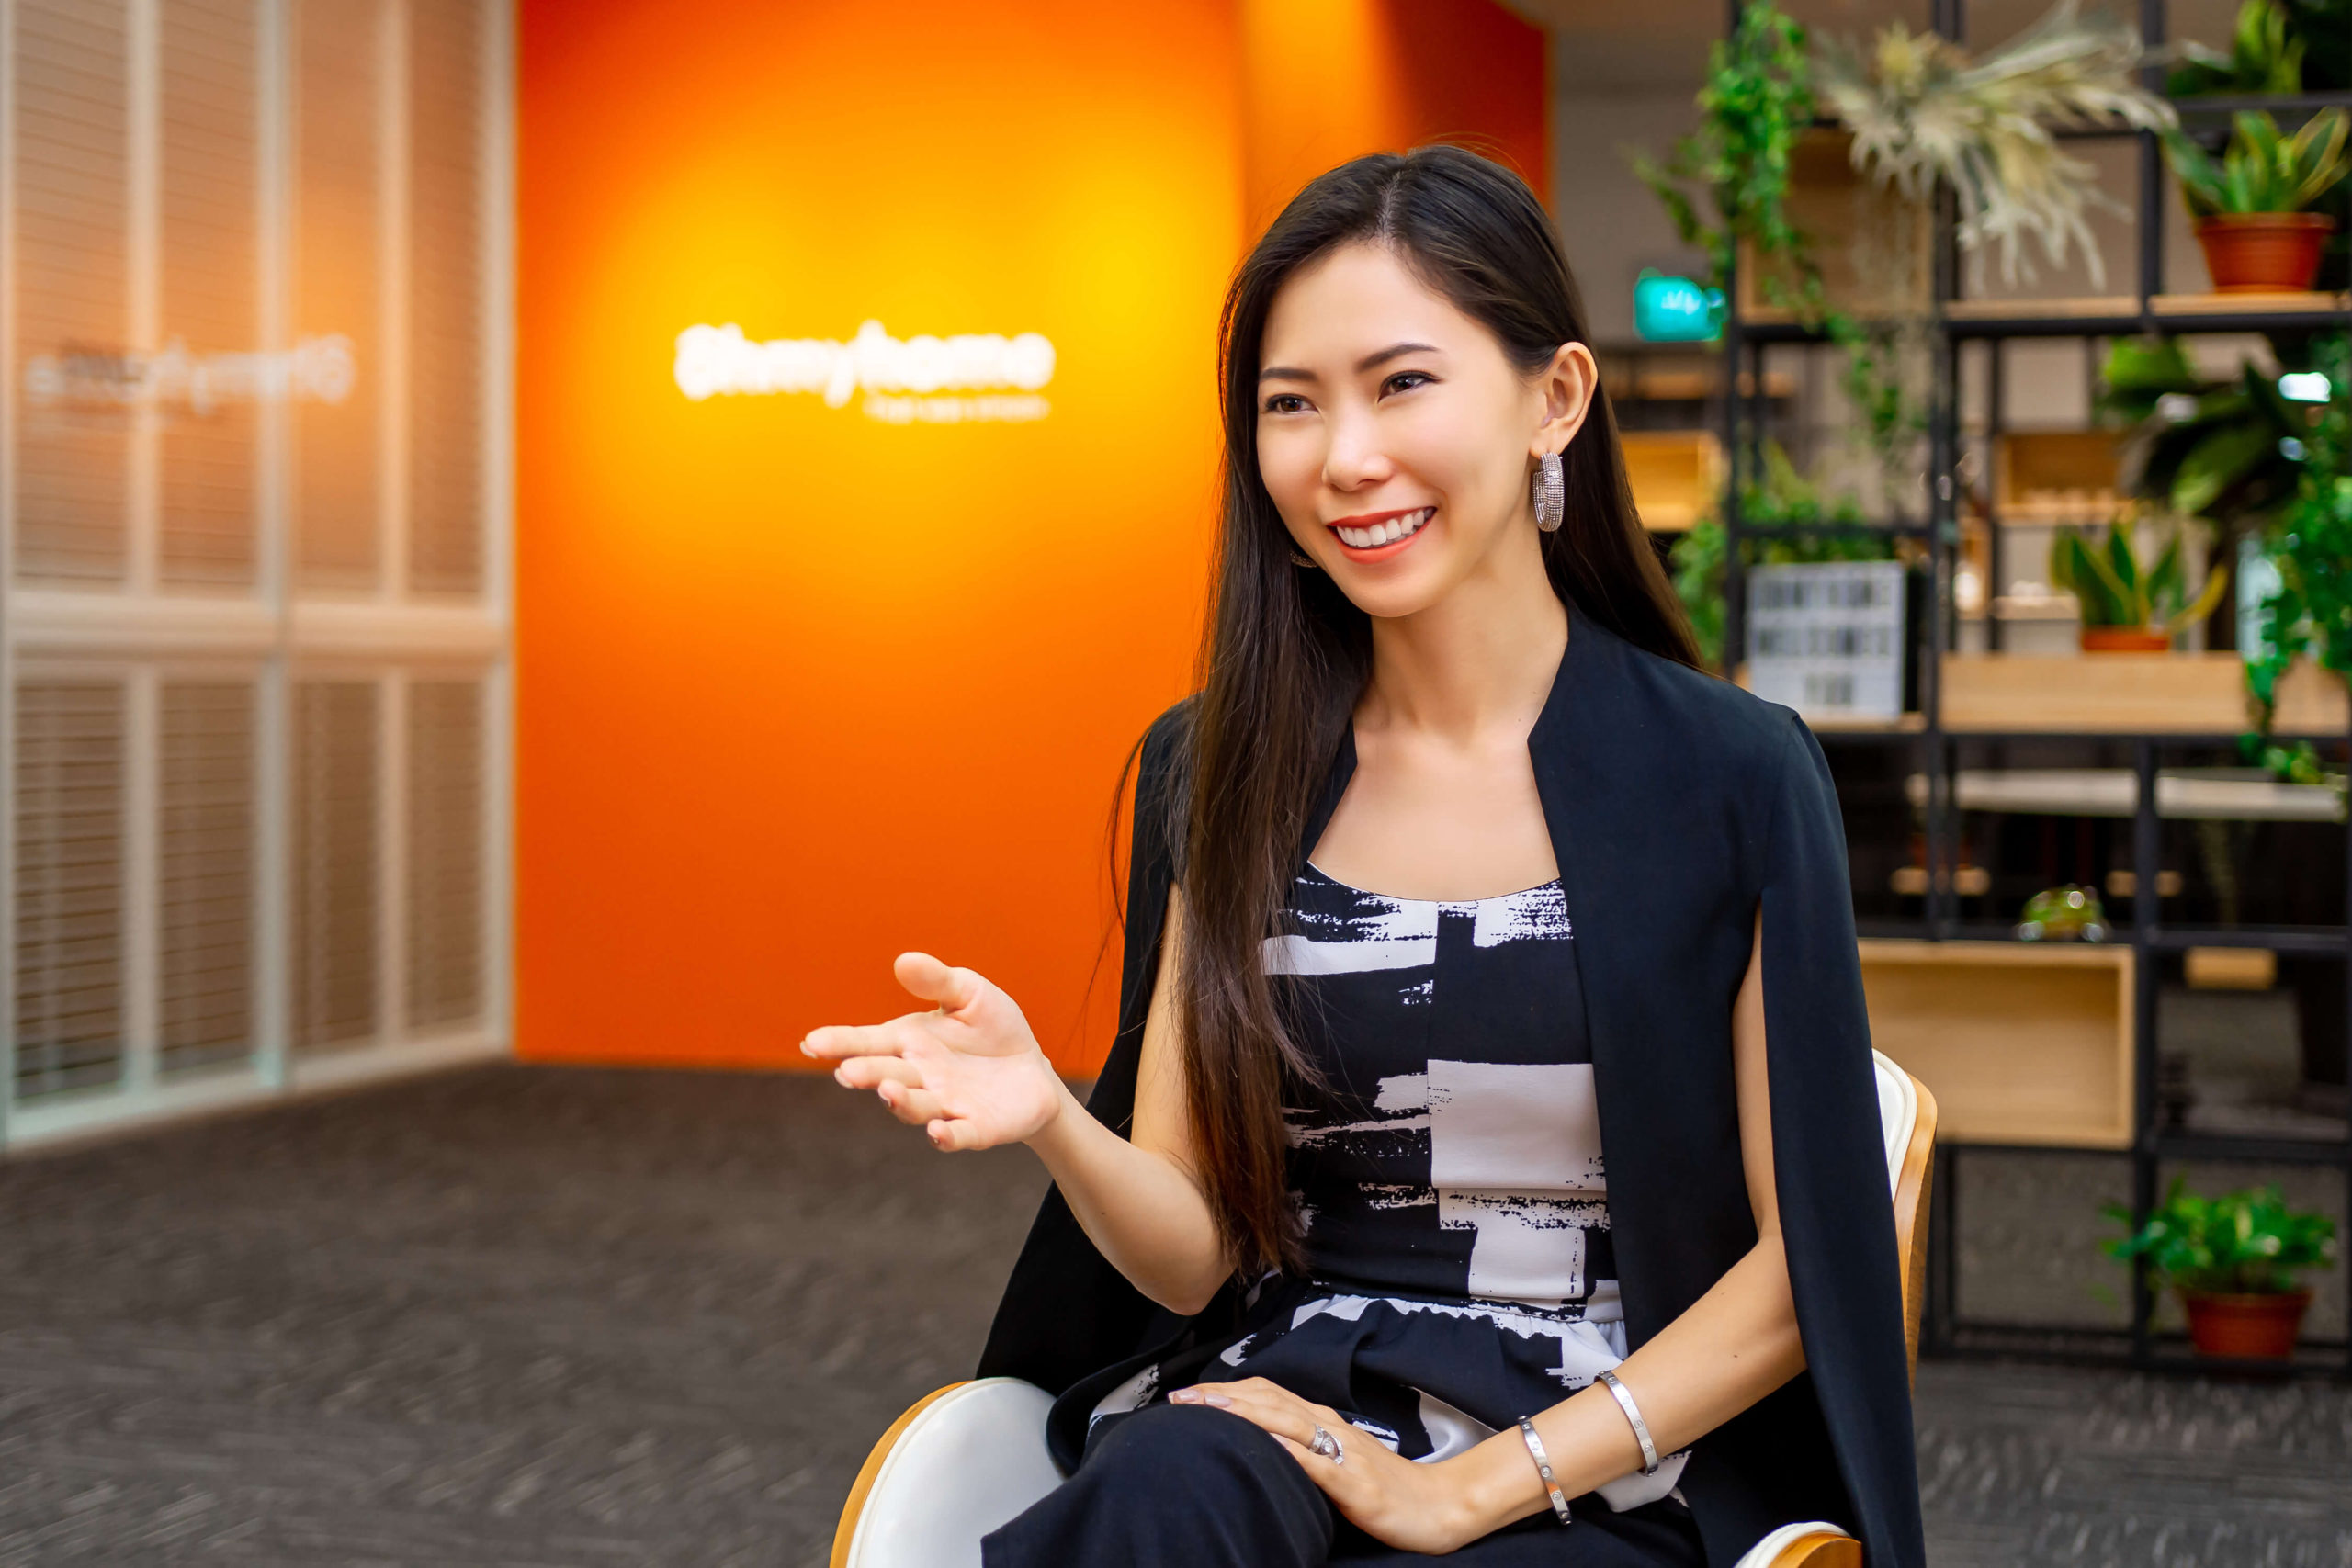 singapore-rice-bowl-startup-awards-2019-female-entrepreneur-rhonda-wong-recognised-founder-year